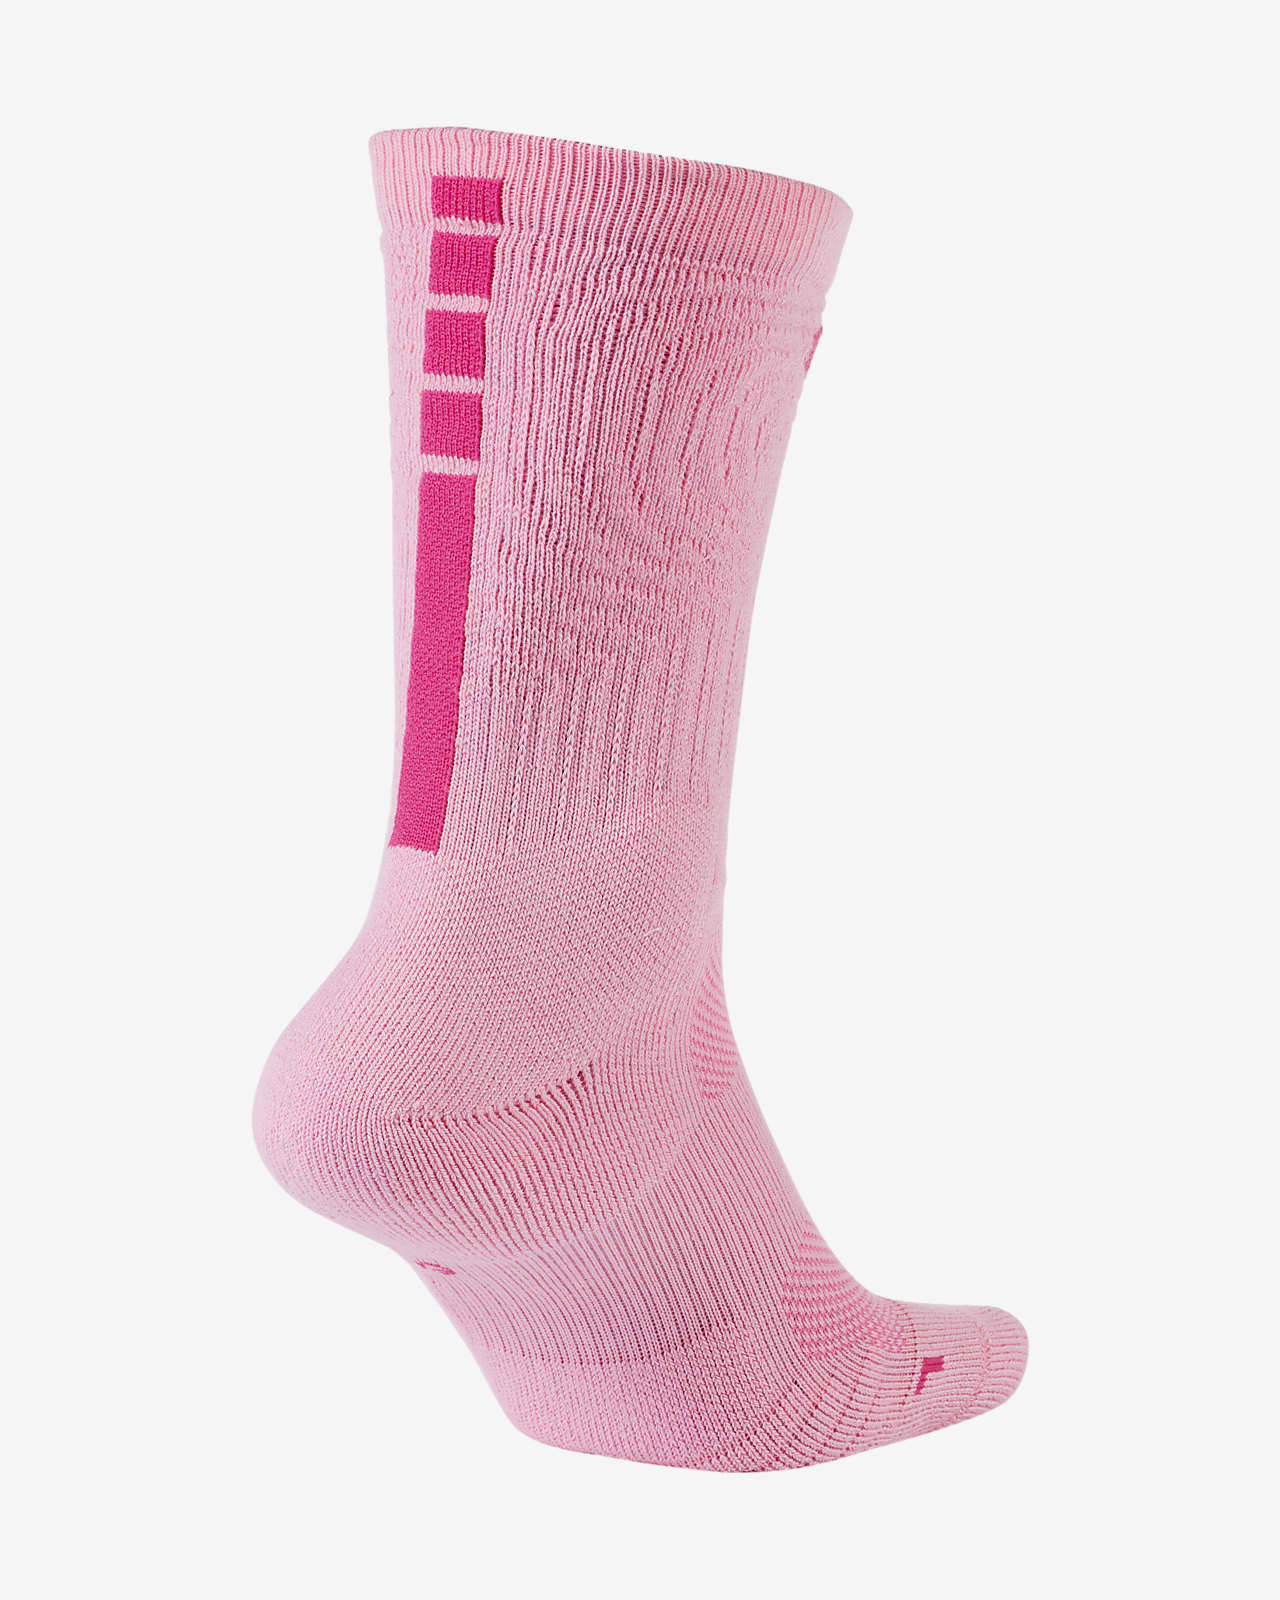 Nike Kay Yow Elite Crew Basketball Socks Pink/White Size Socks Medium 4-8